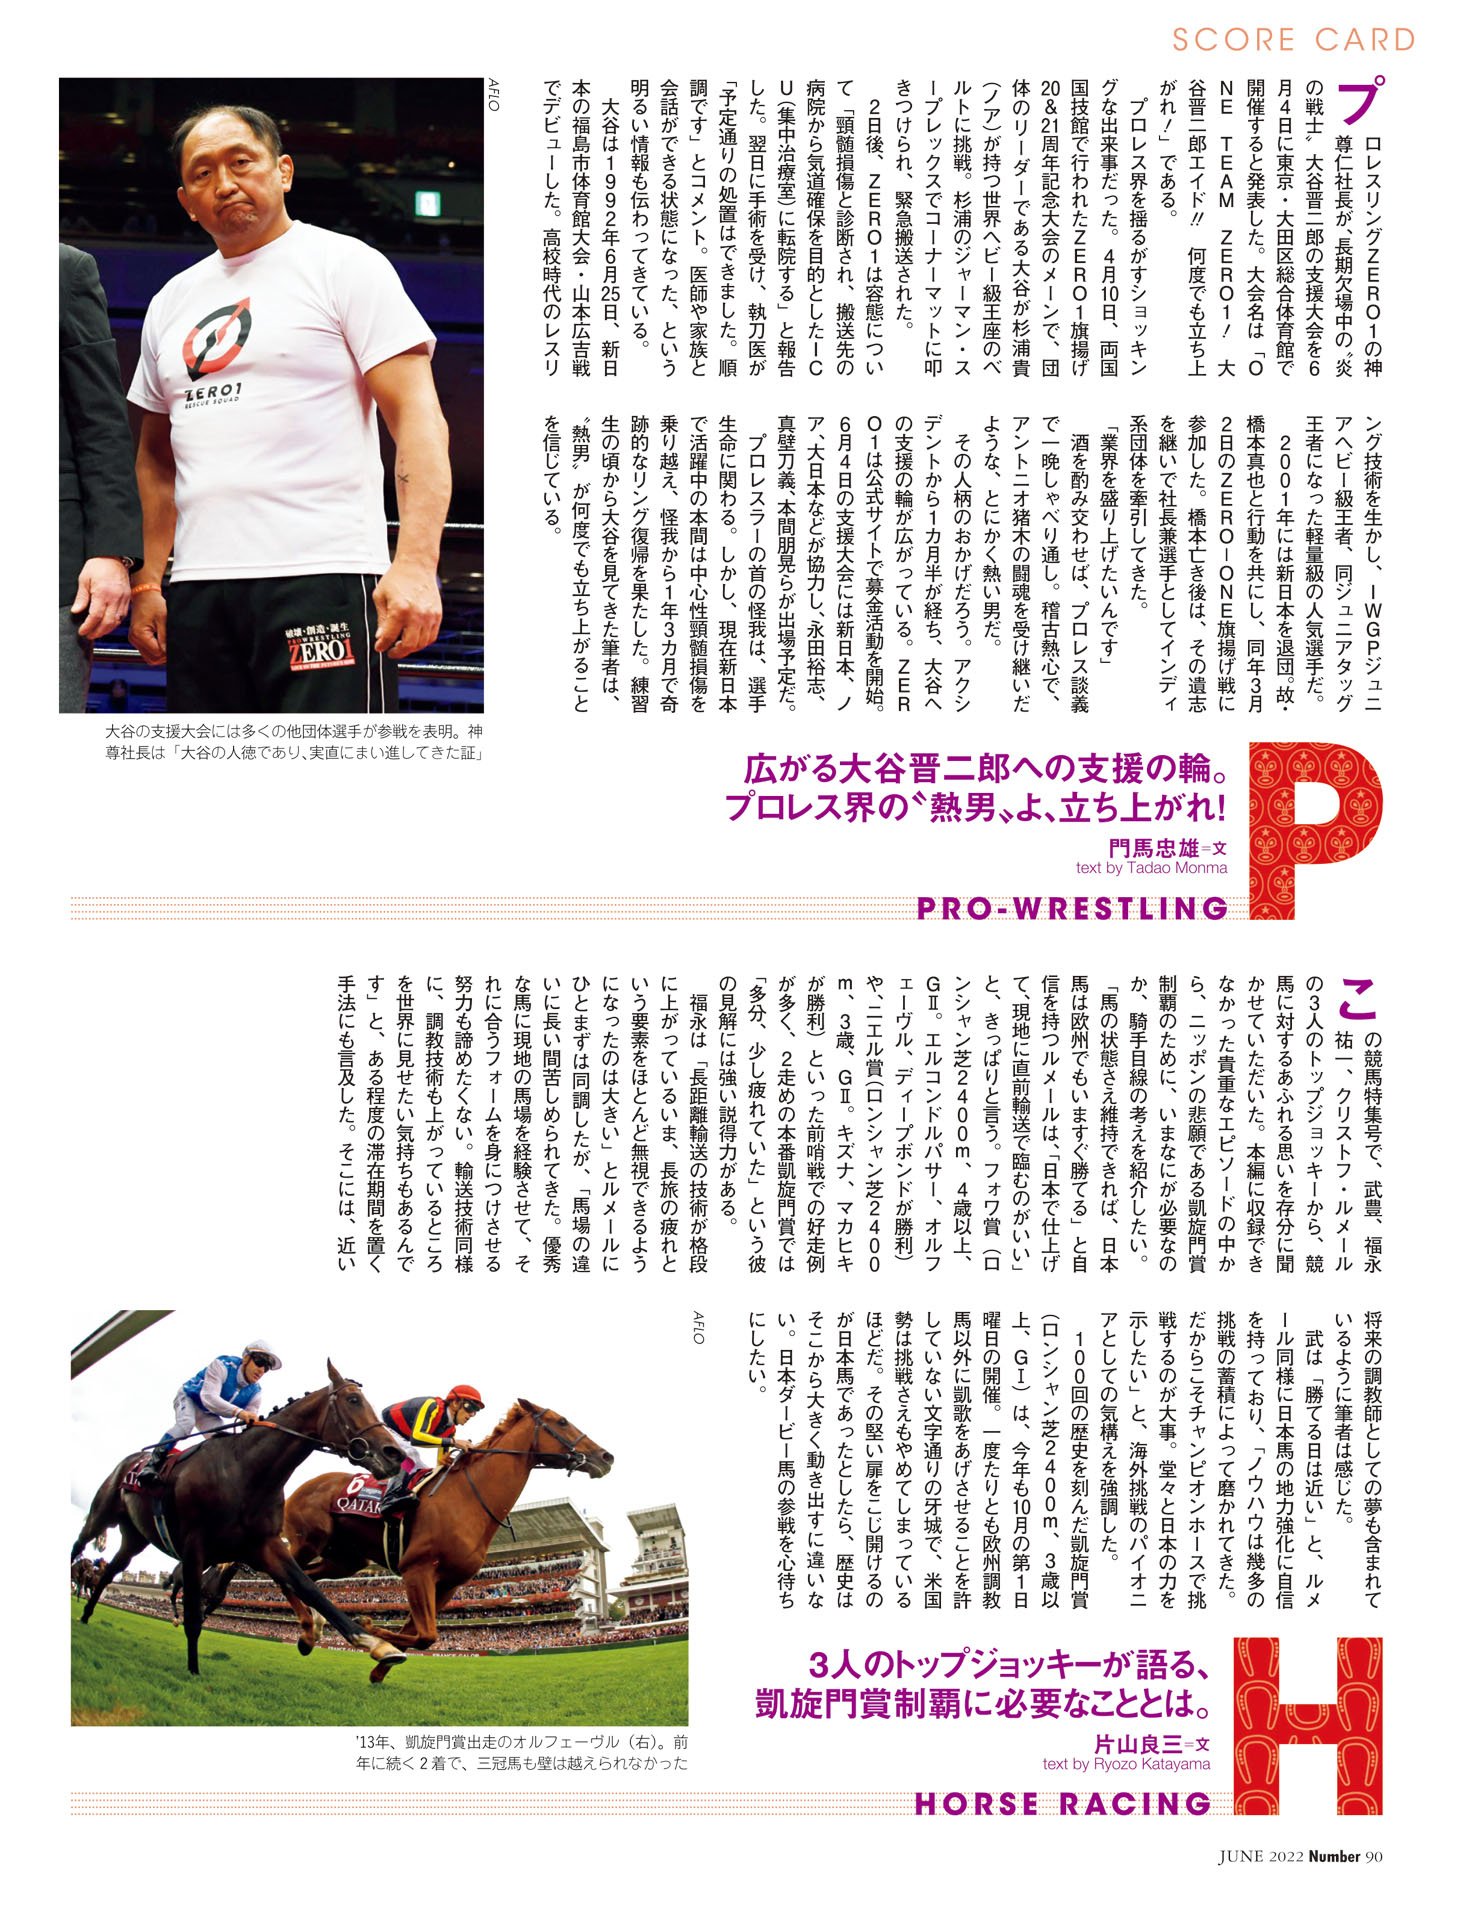 【SCORE CARD】PRO-WRESTLING／HORSE RACING